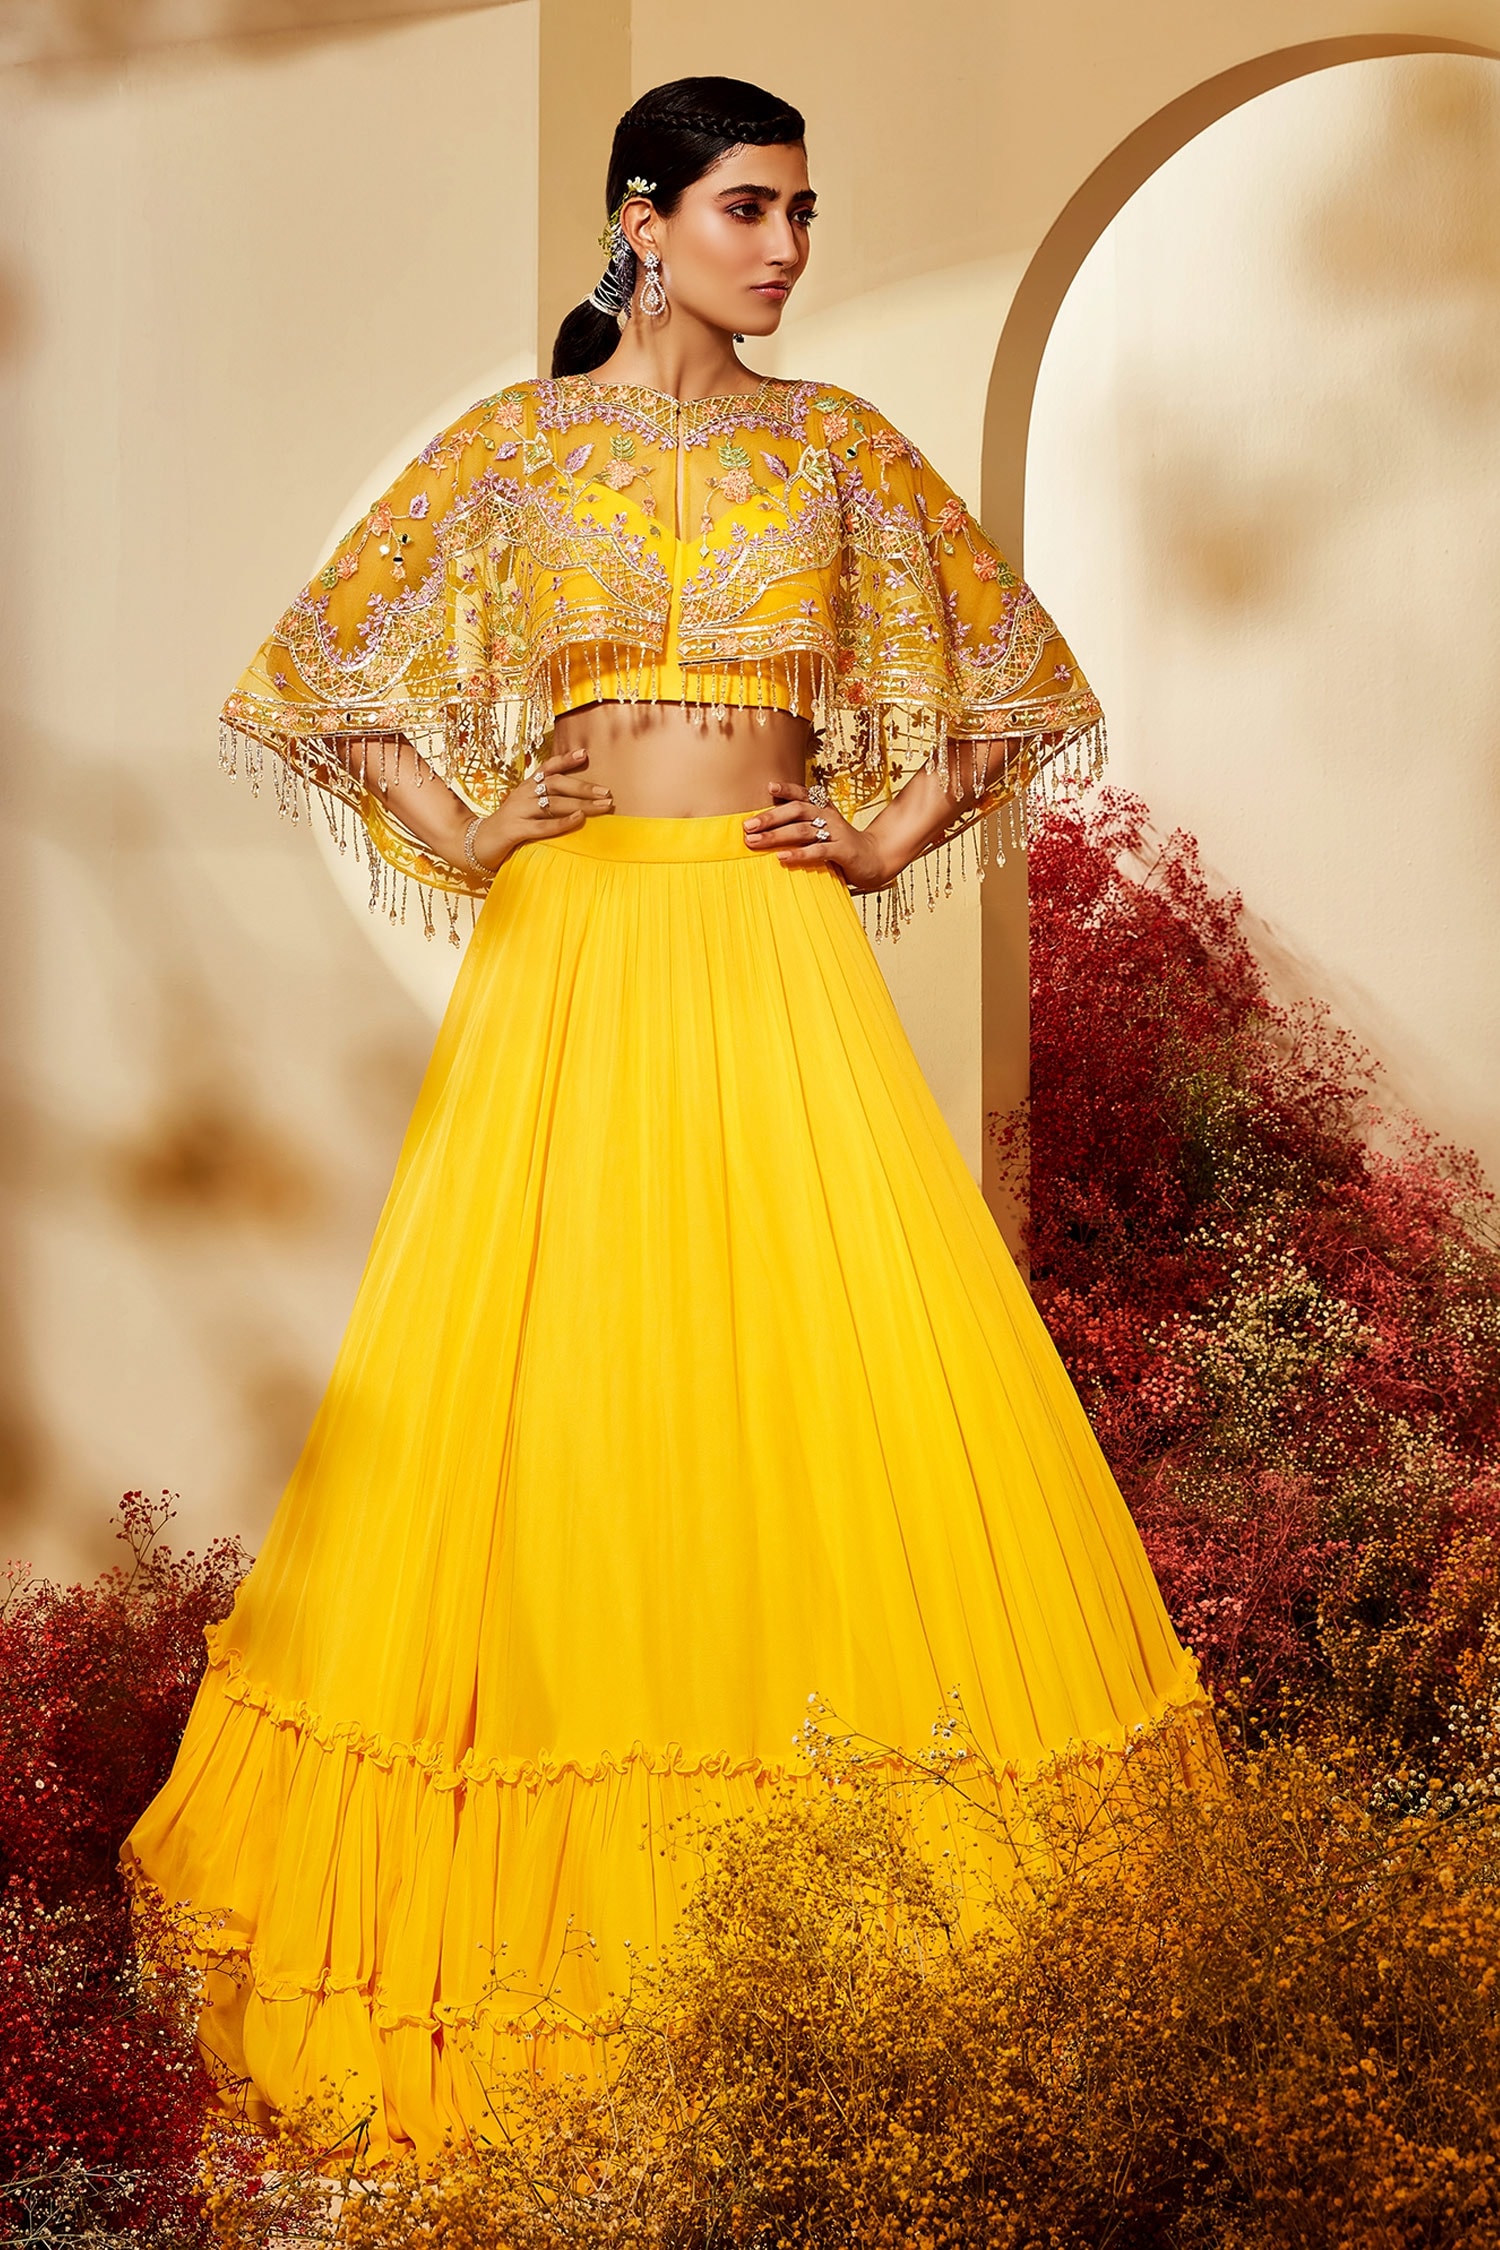 Designer Yellow Net lehenga Choli at Rs.699/Piece in surat offer by lavish  club